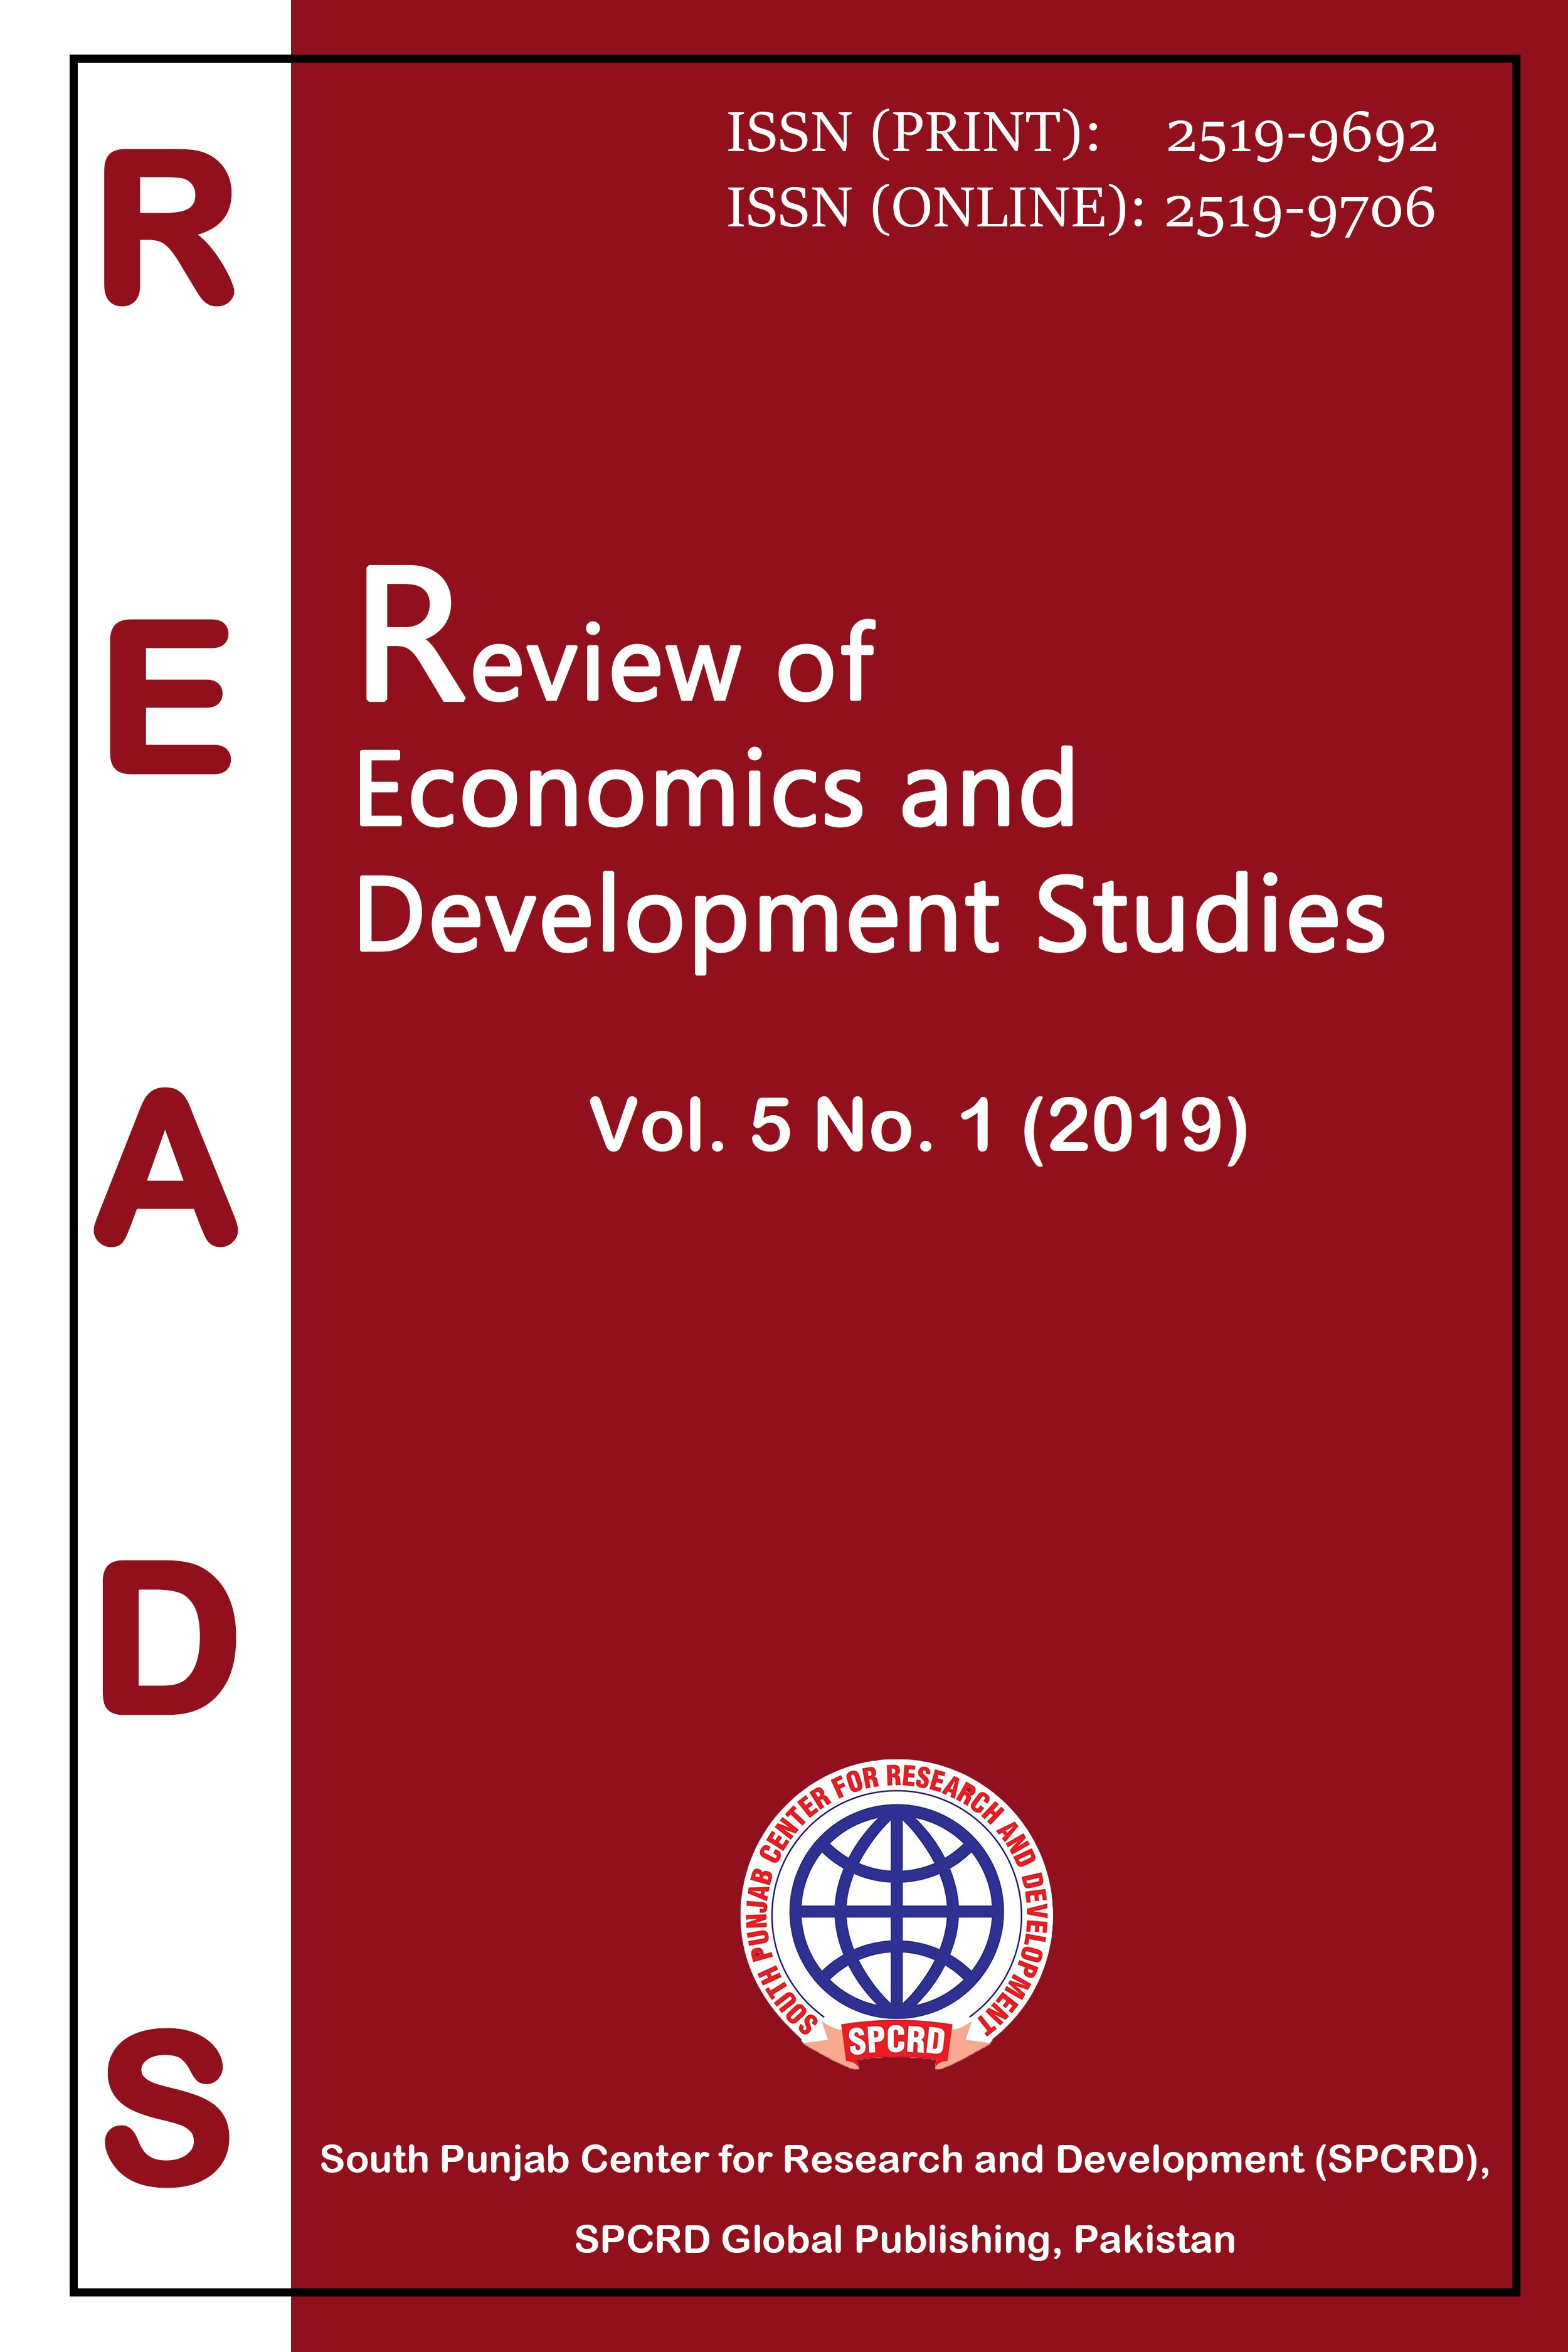 					View Vol. 5 No. 1 (2019): Review of Economics and Development Studies (READS)
				